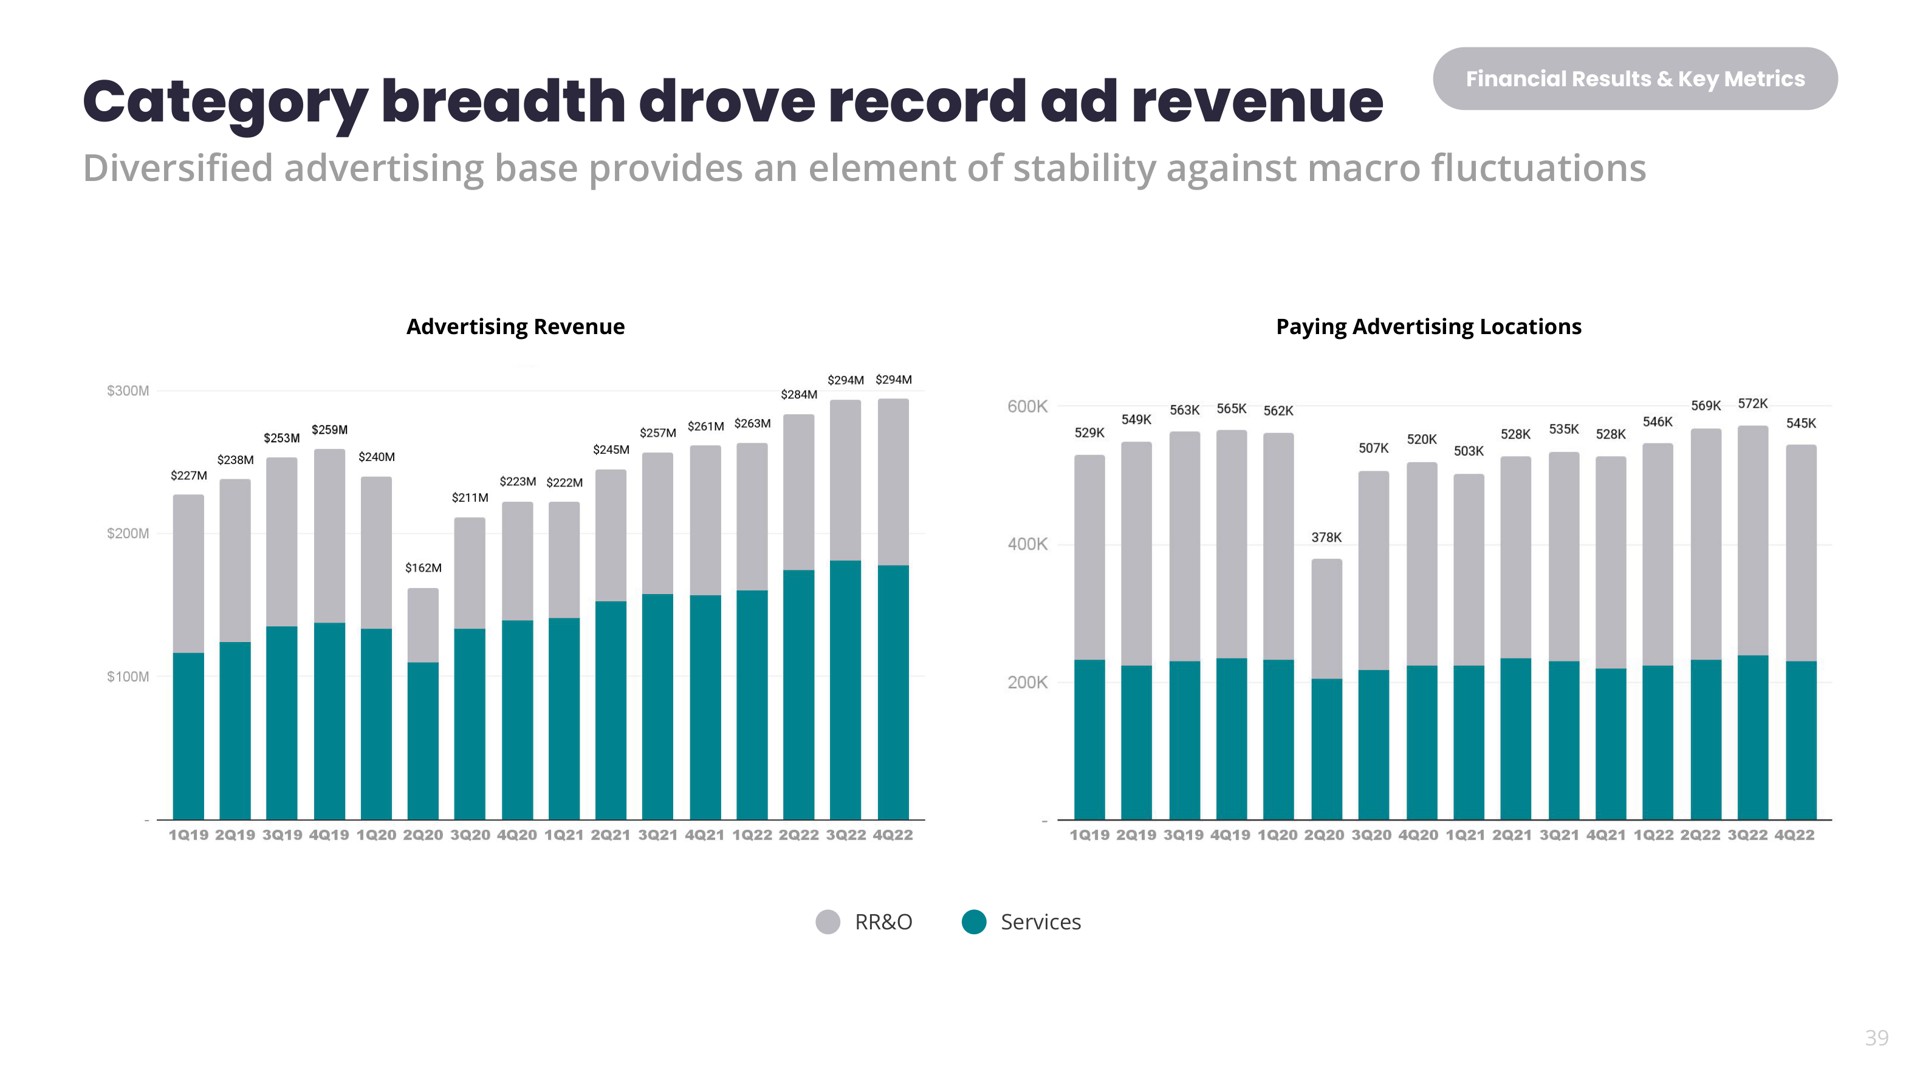 category breadth drove record revenue | Yelp